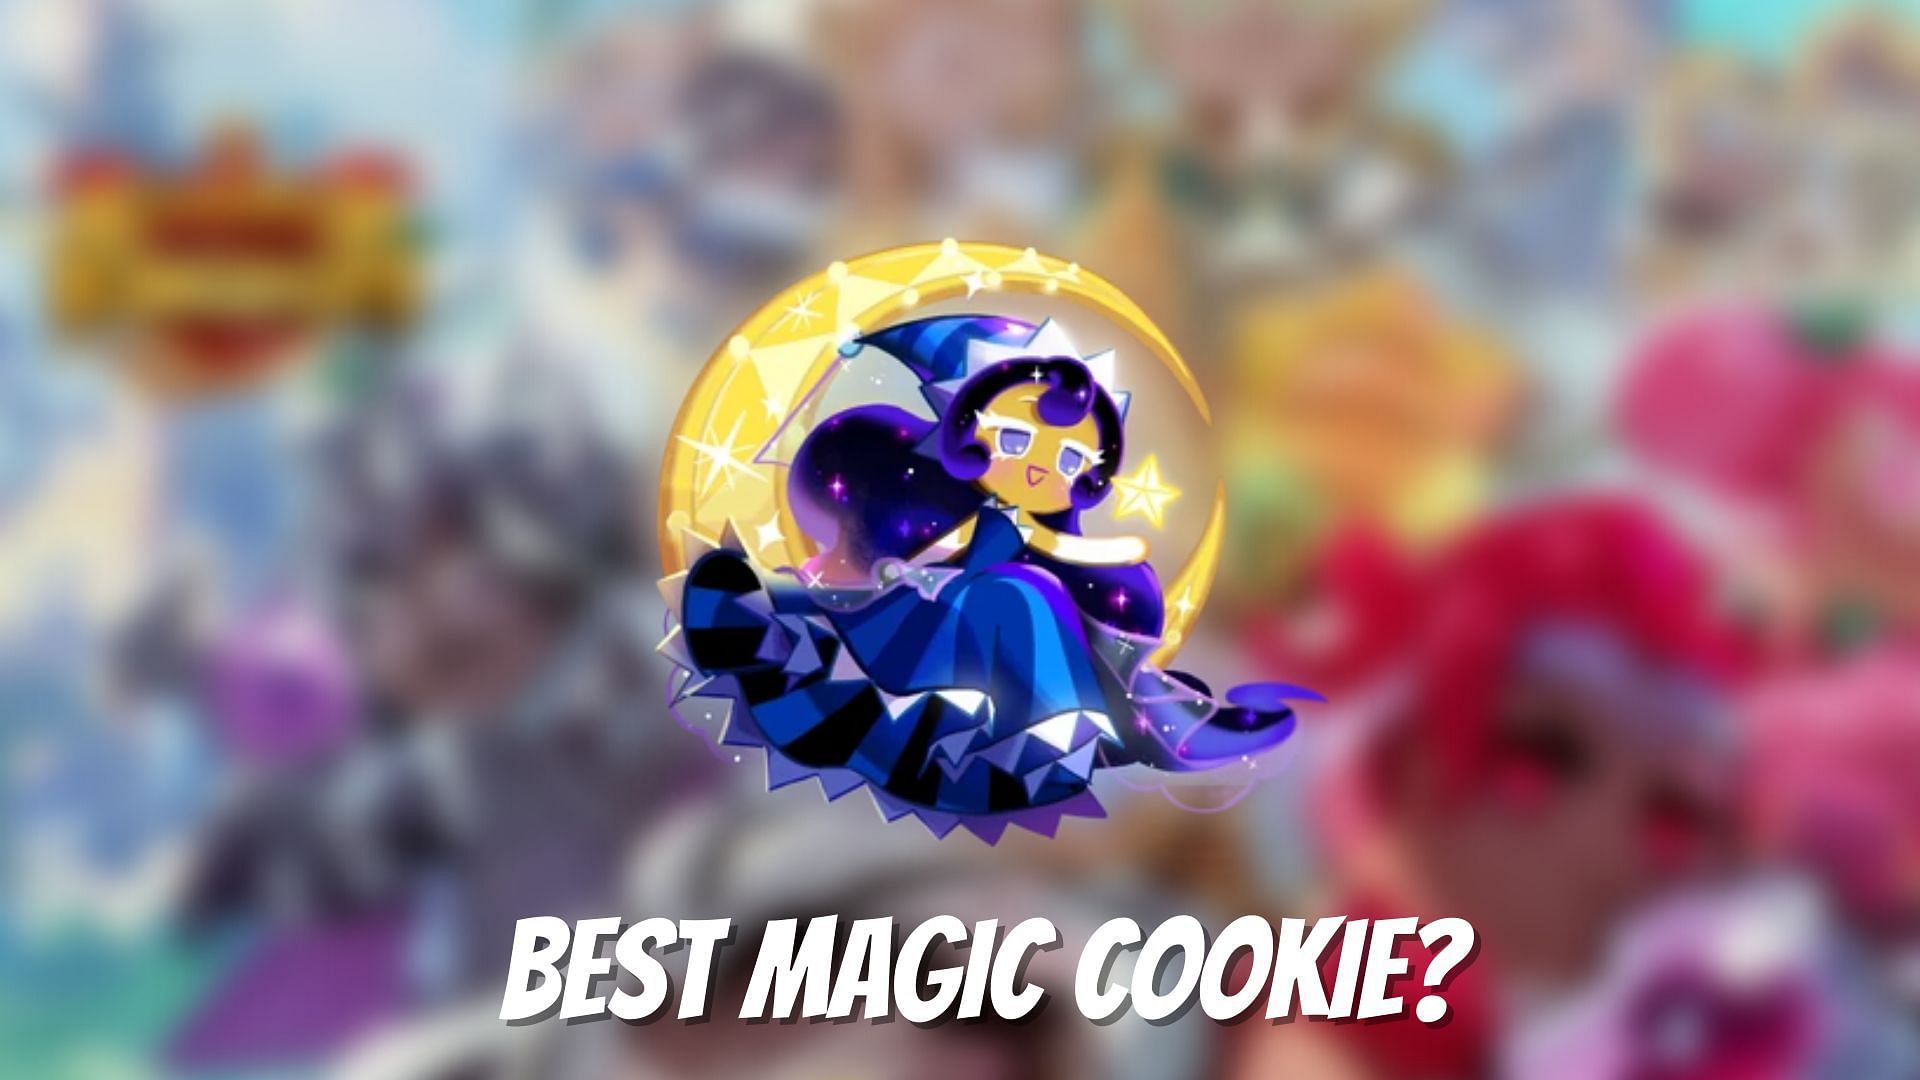 Moonlight is the 14th Magic Cookie in the game (Image via Sportskeeda)